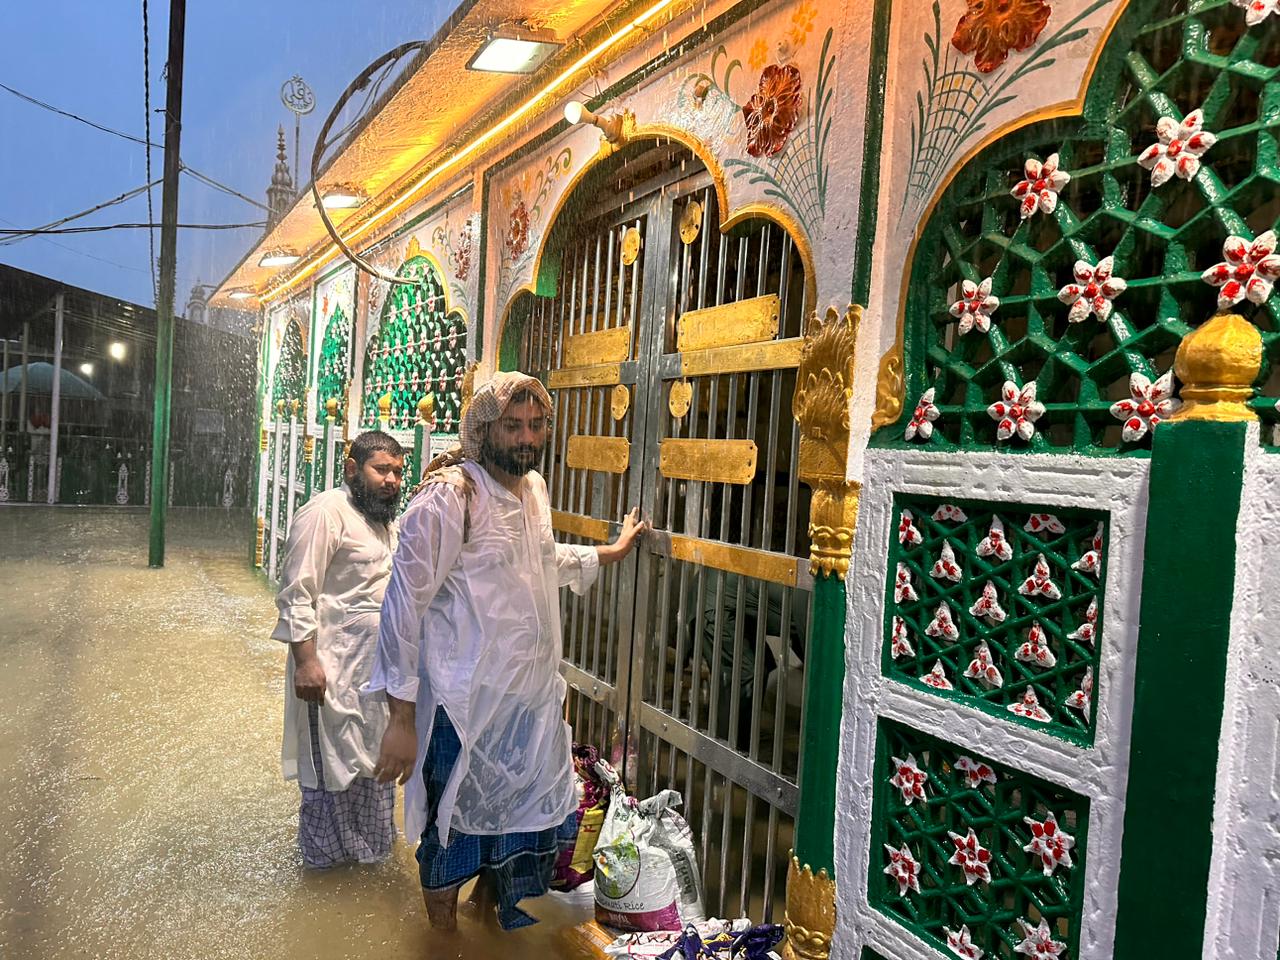 कलियर दरगाह में घुसा पानी Kaliyar dargah me pani jalbharav